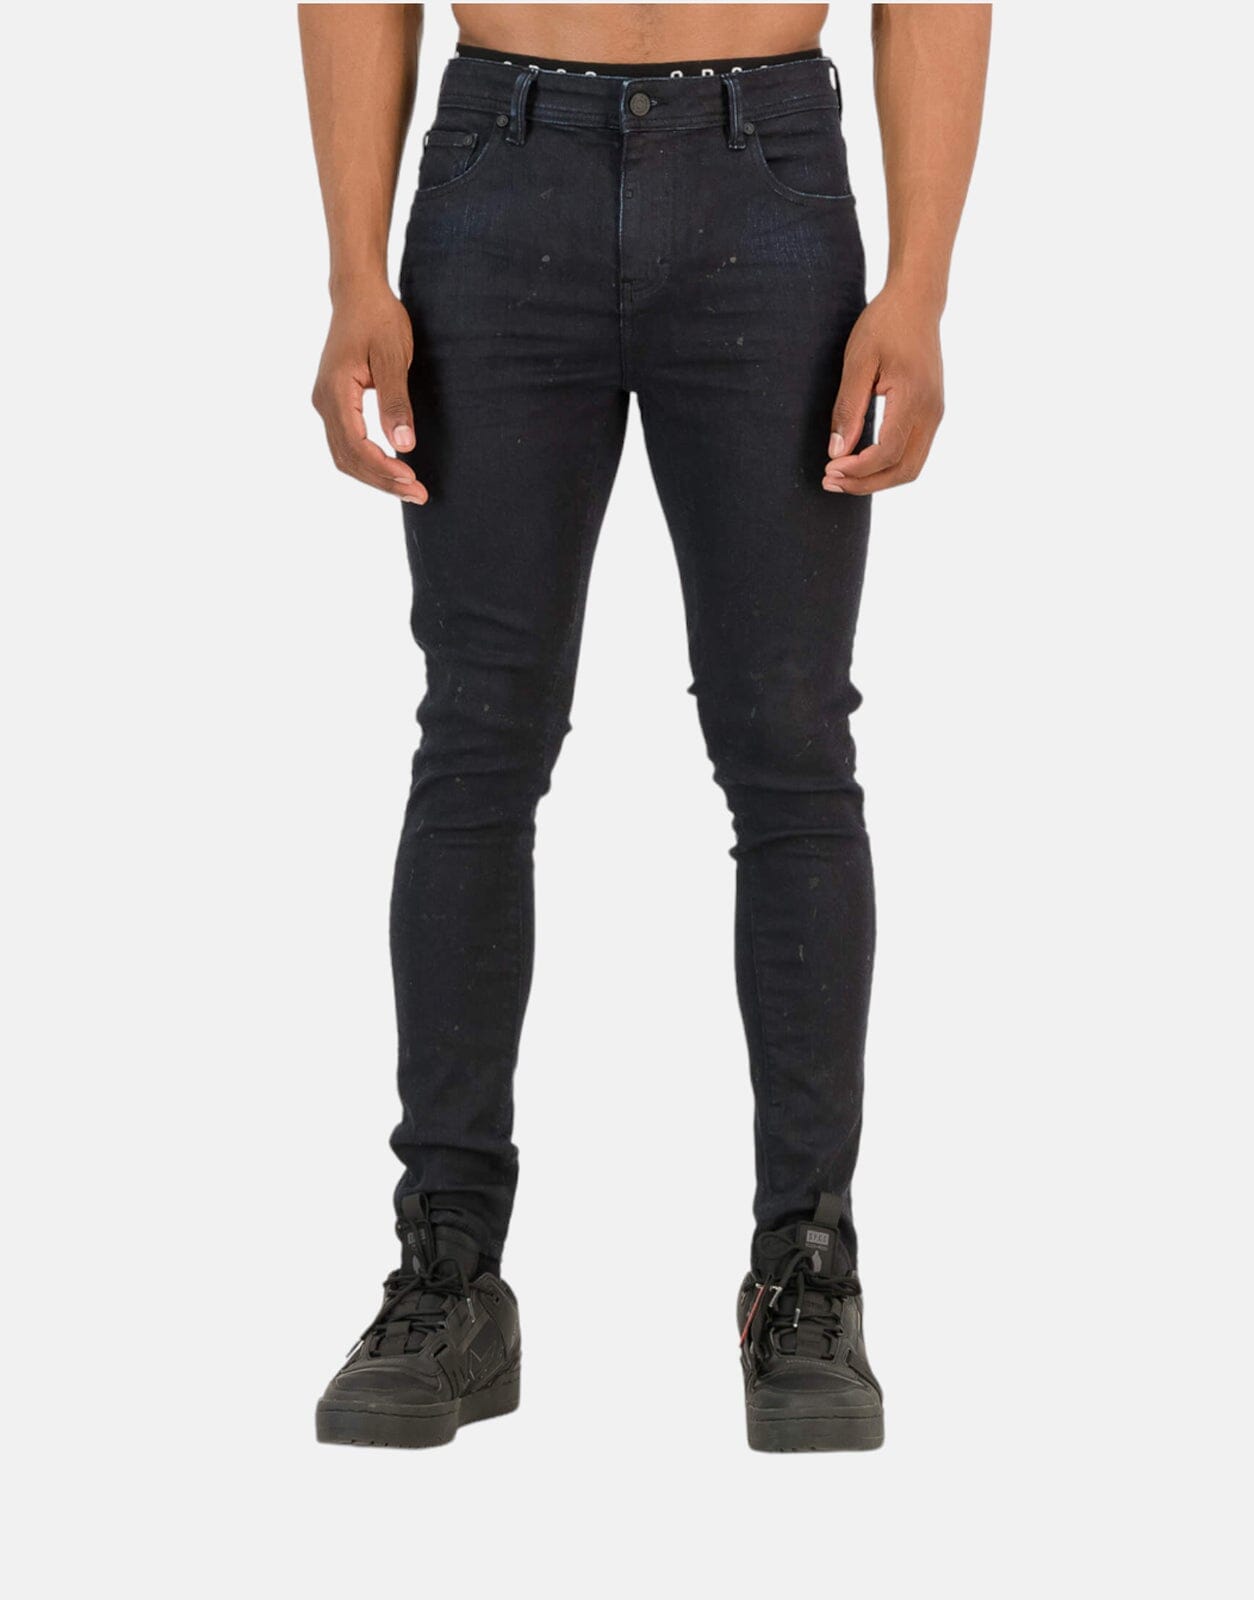 SPCC Omega Indigo Jeans - Subwear